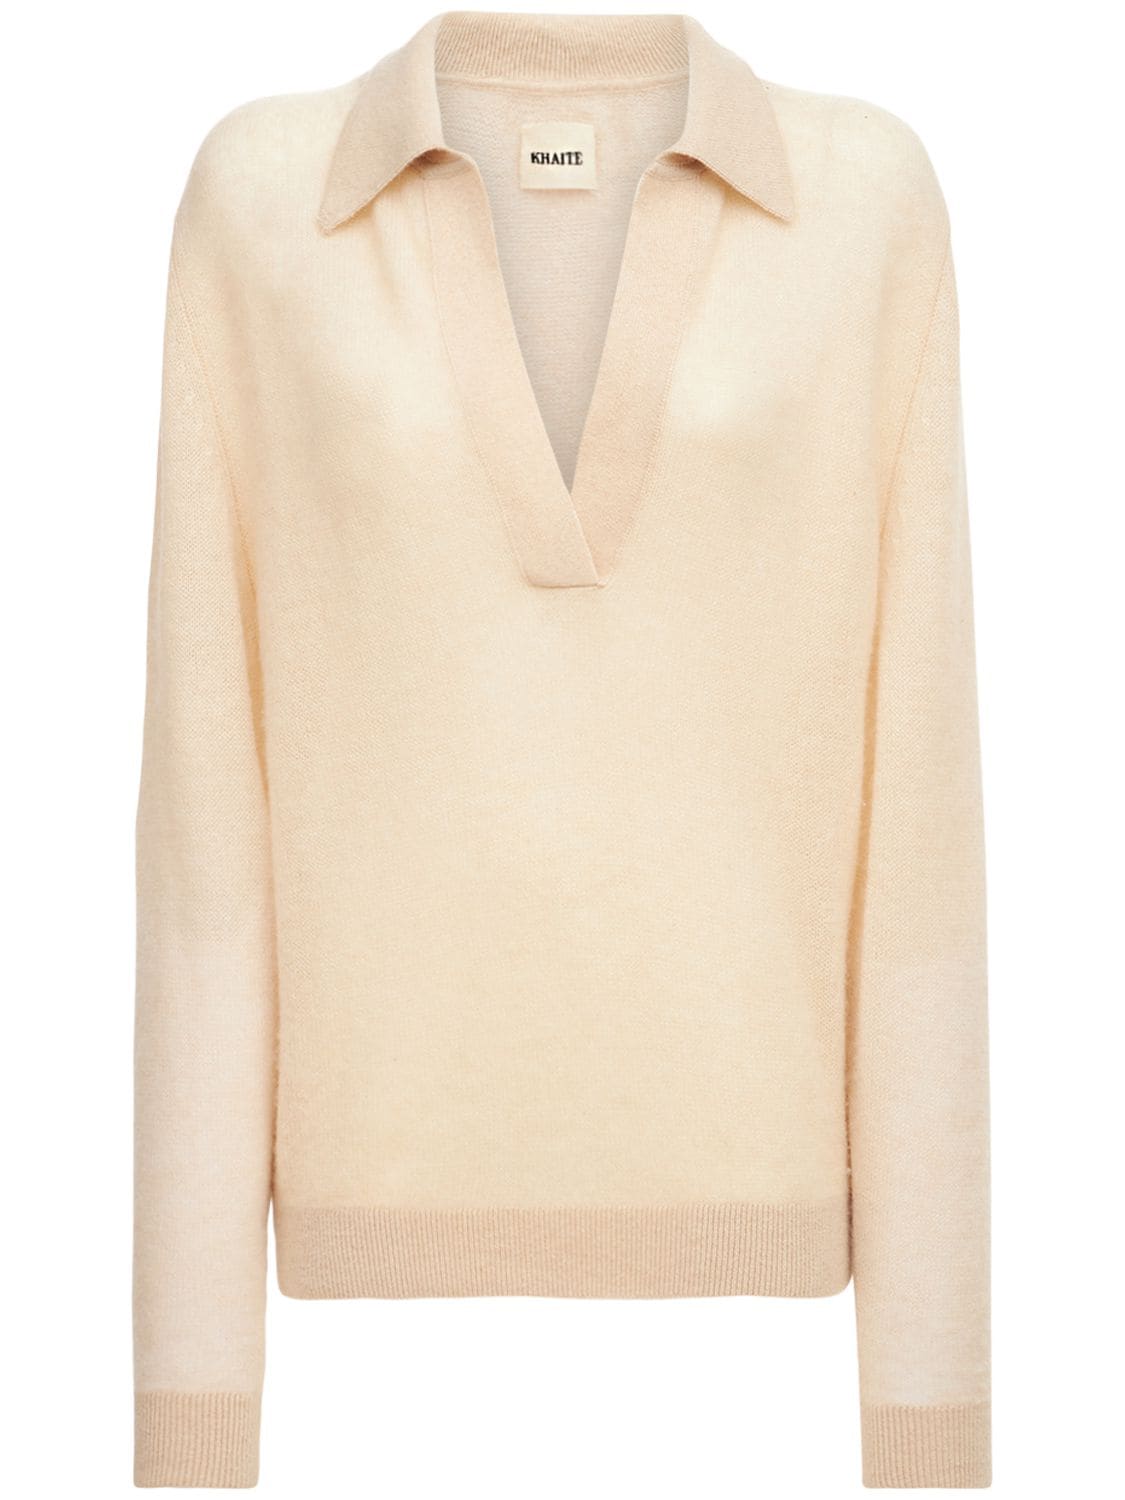 Khaite - Jo stretch cashmere sweater - Ivory | Luisaviaroma